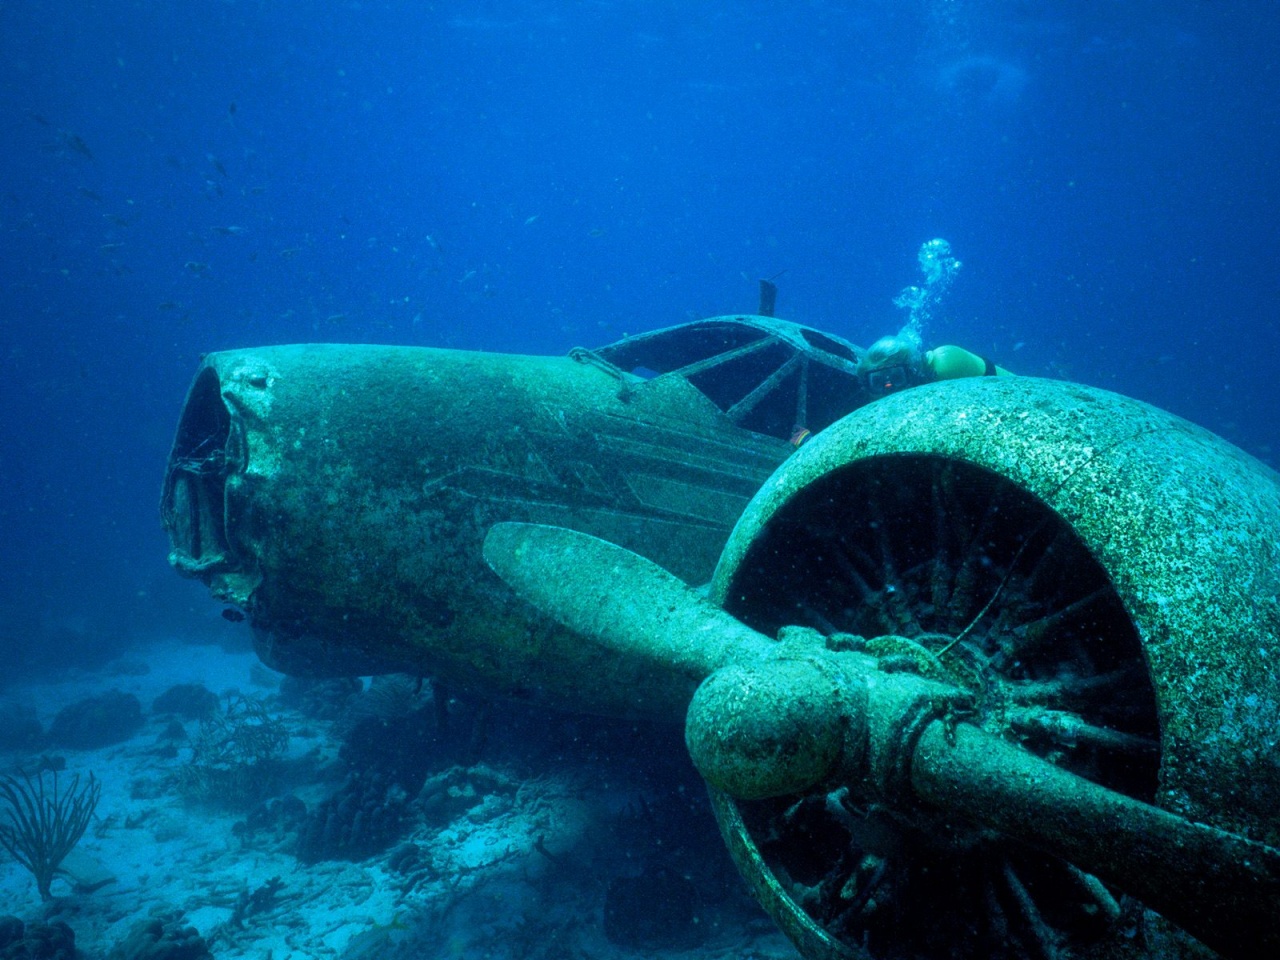 Old air plane crashed underwater